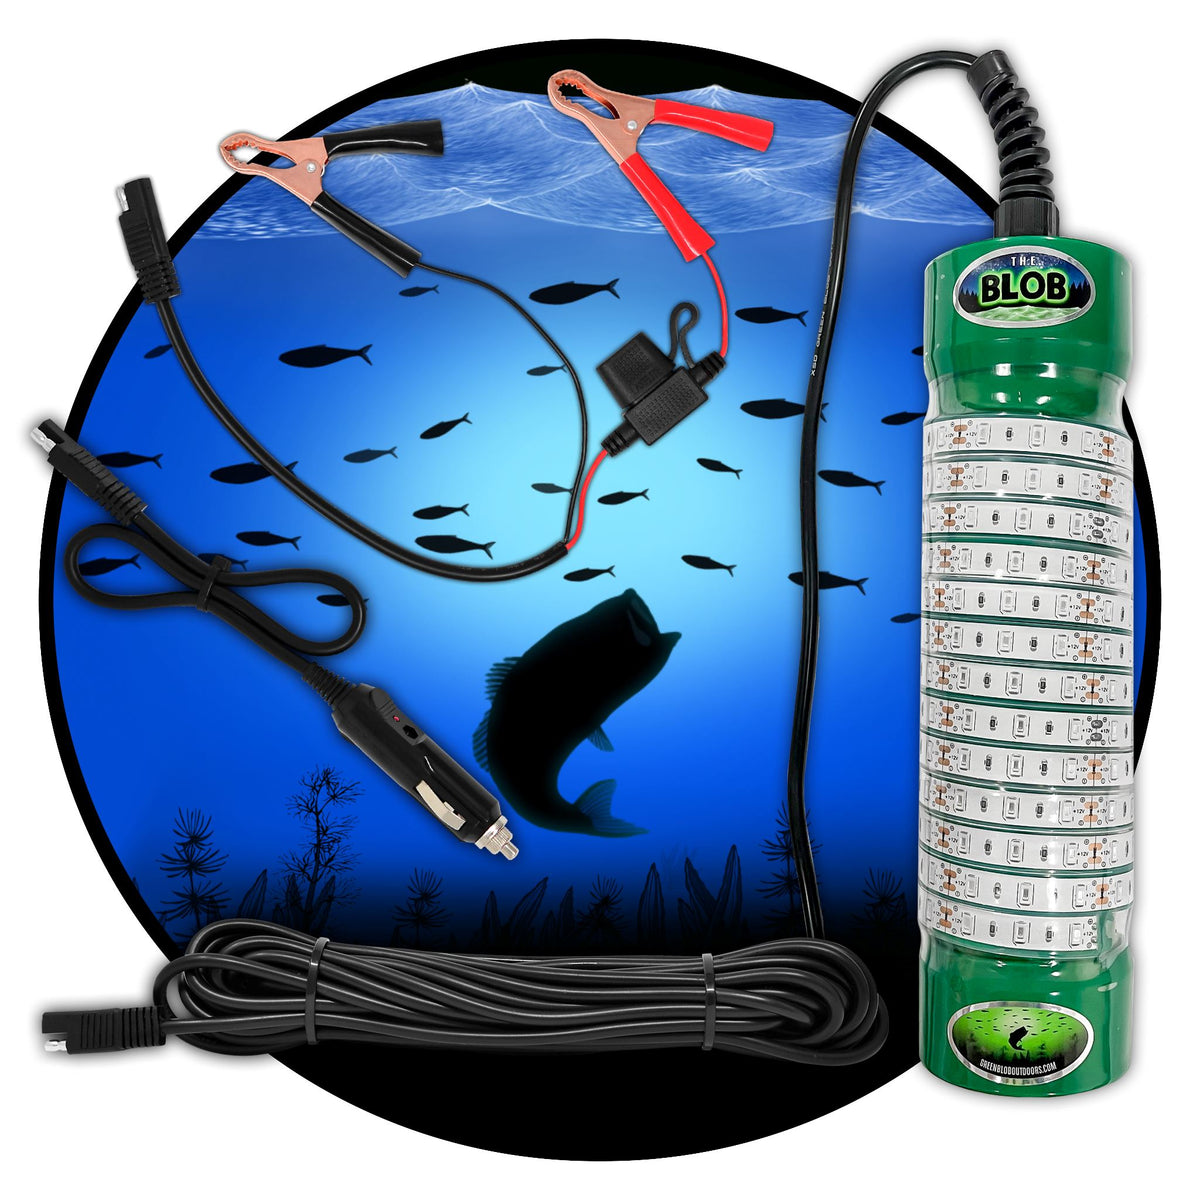 Build Your Blob Build Your Blob Green Blob Outdoors Blue 7,500 Lumens Alligator Clips + Cig Lighter Plug 30 Feet